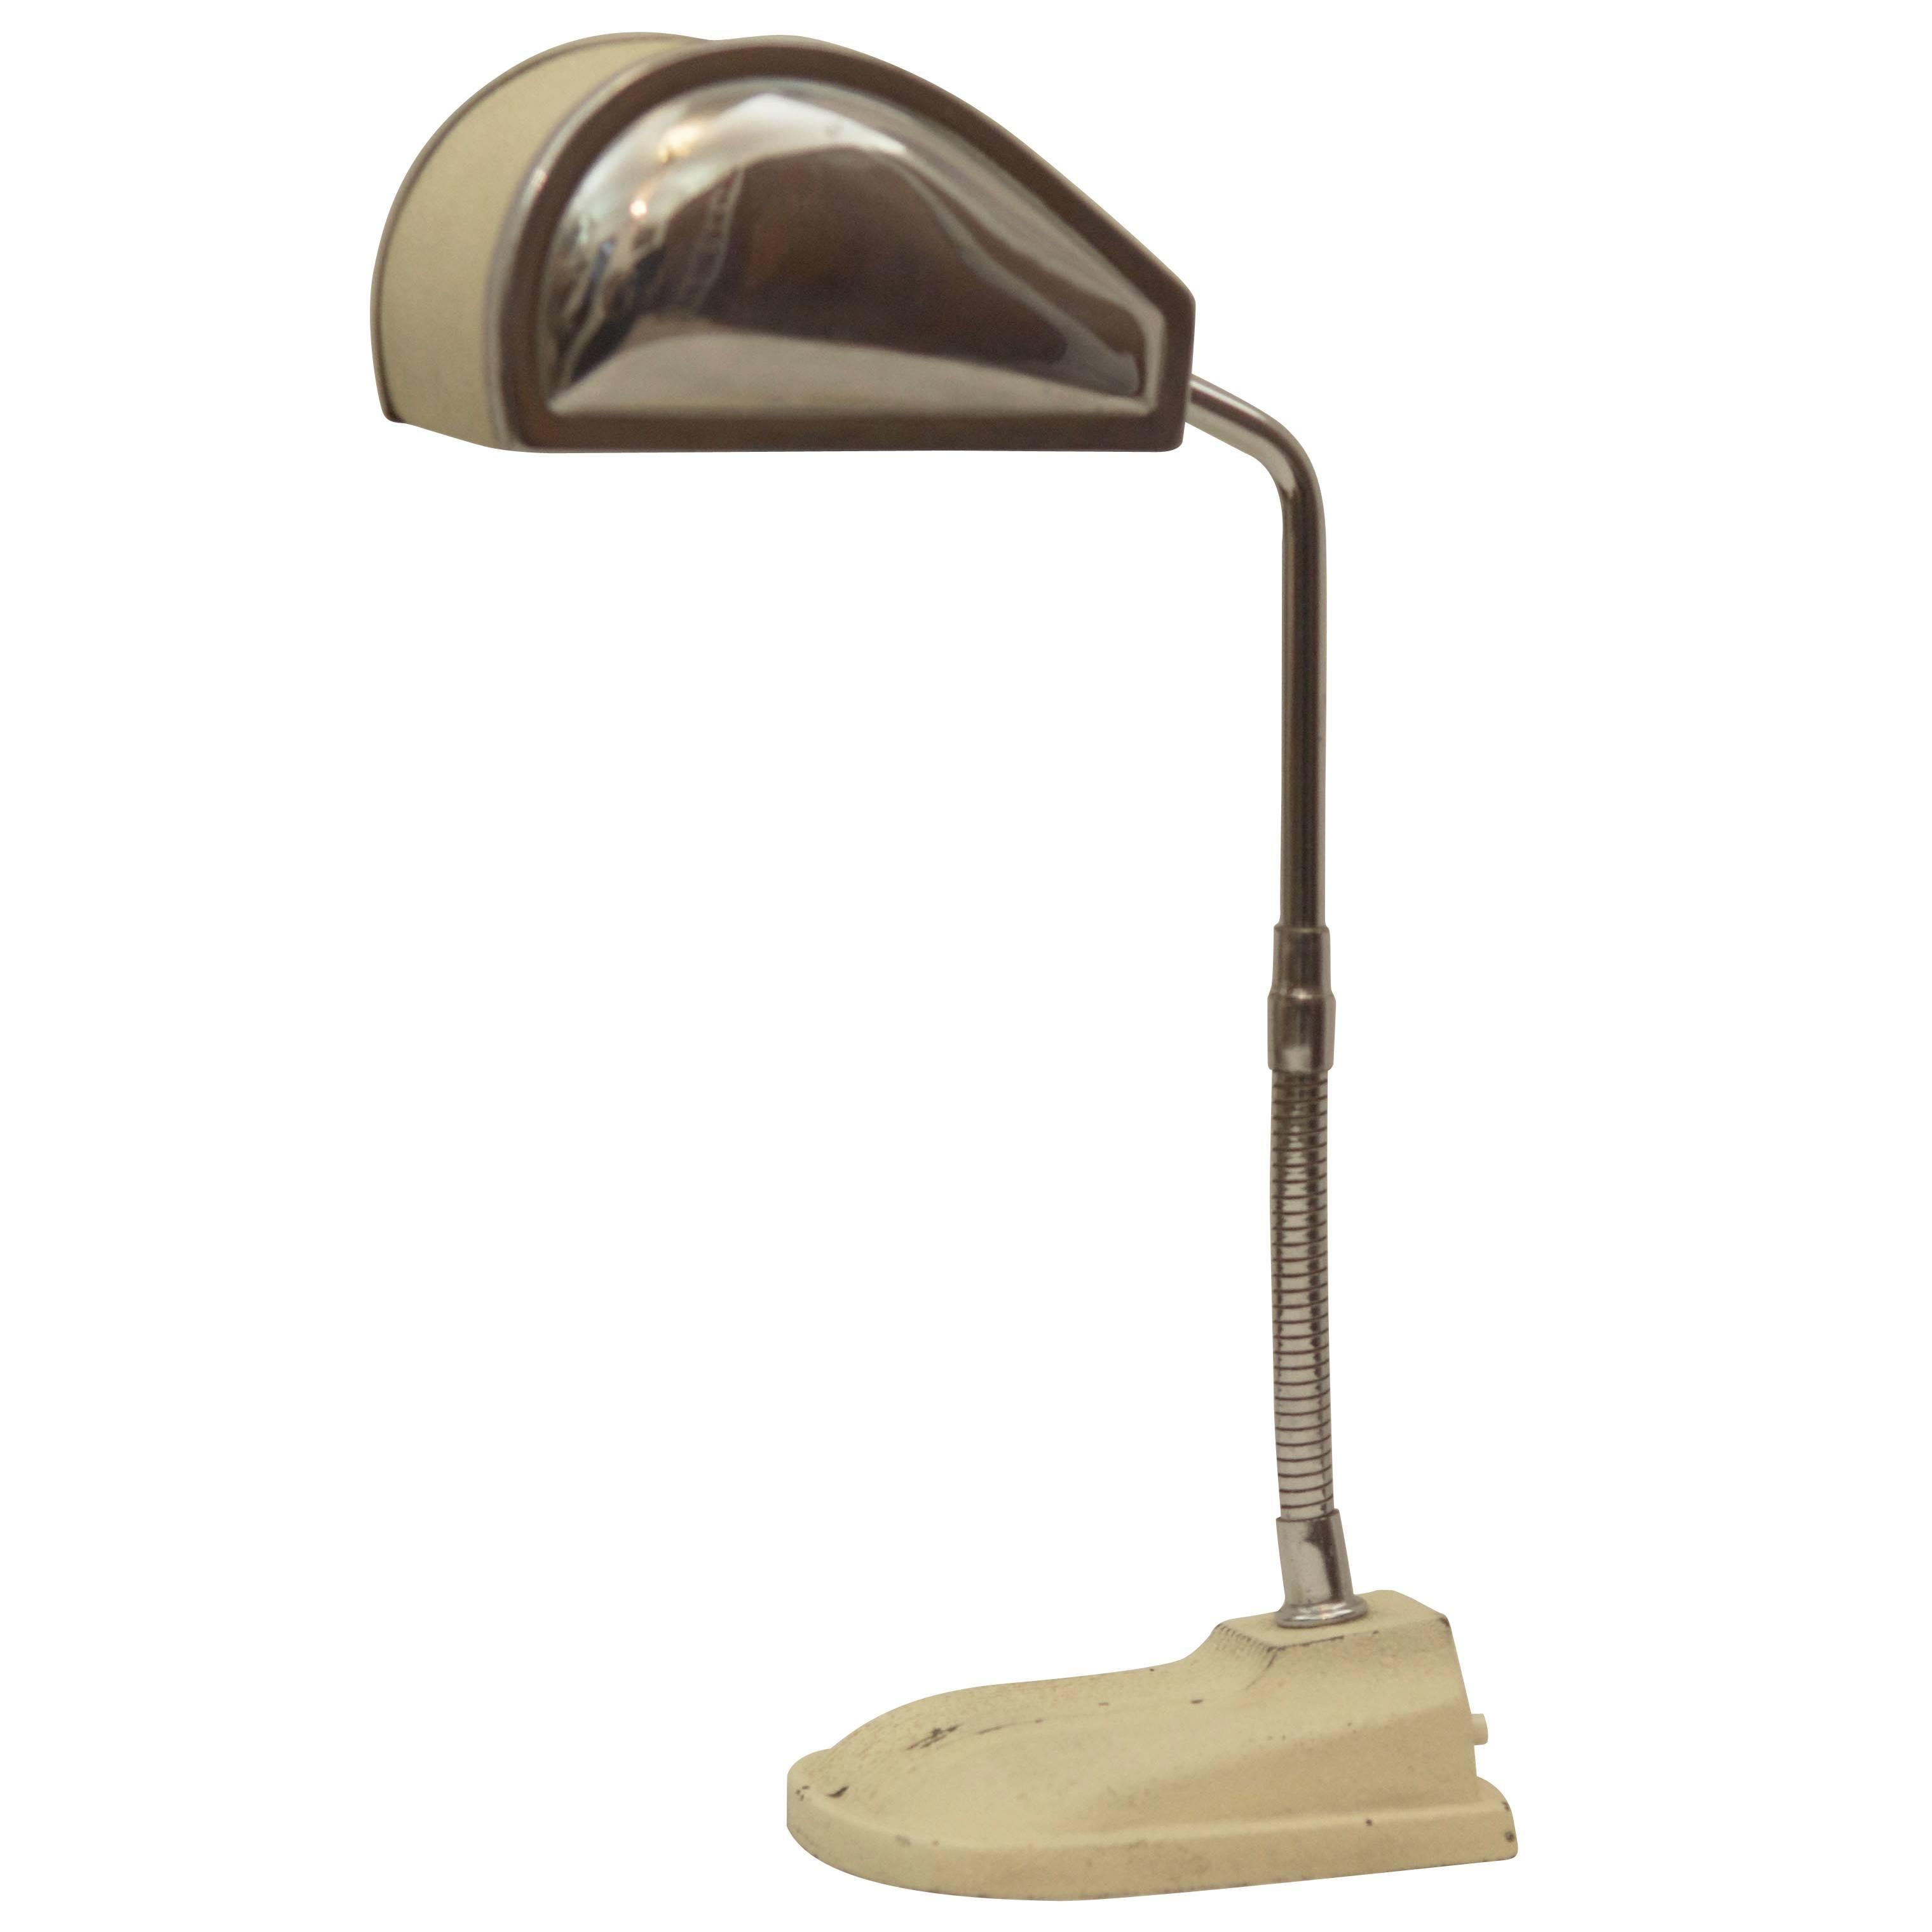 Unusual Jumo Table Lamp For Sale